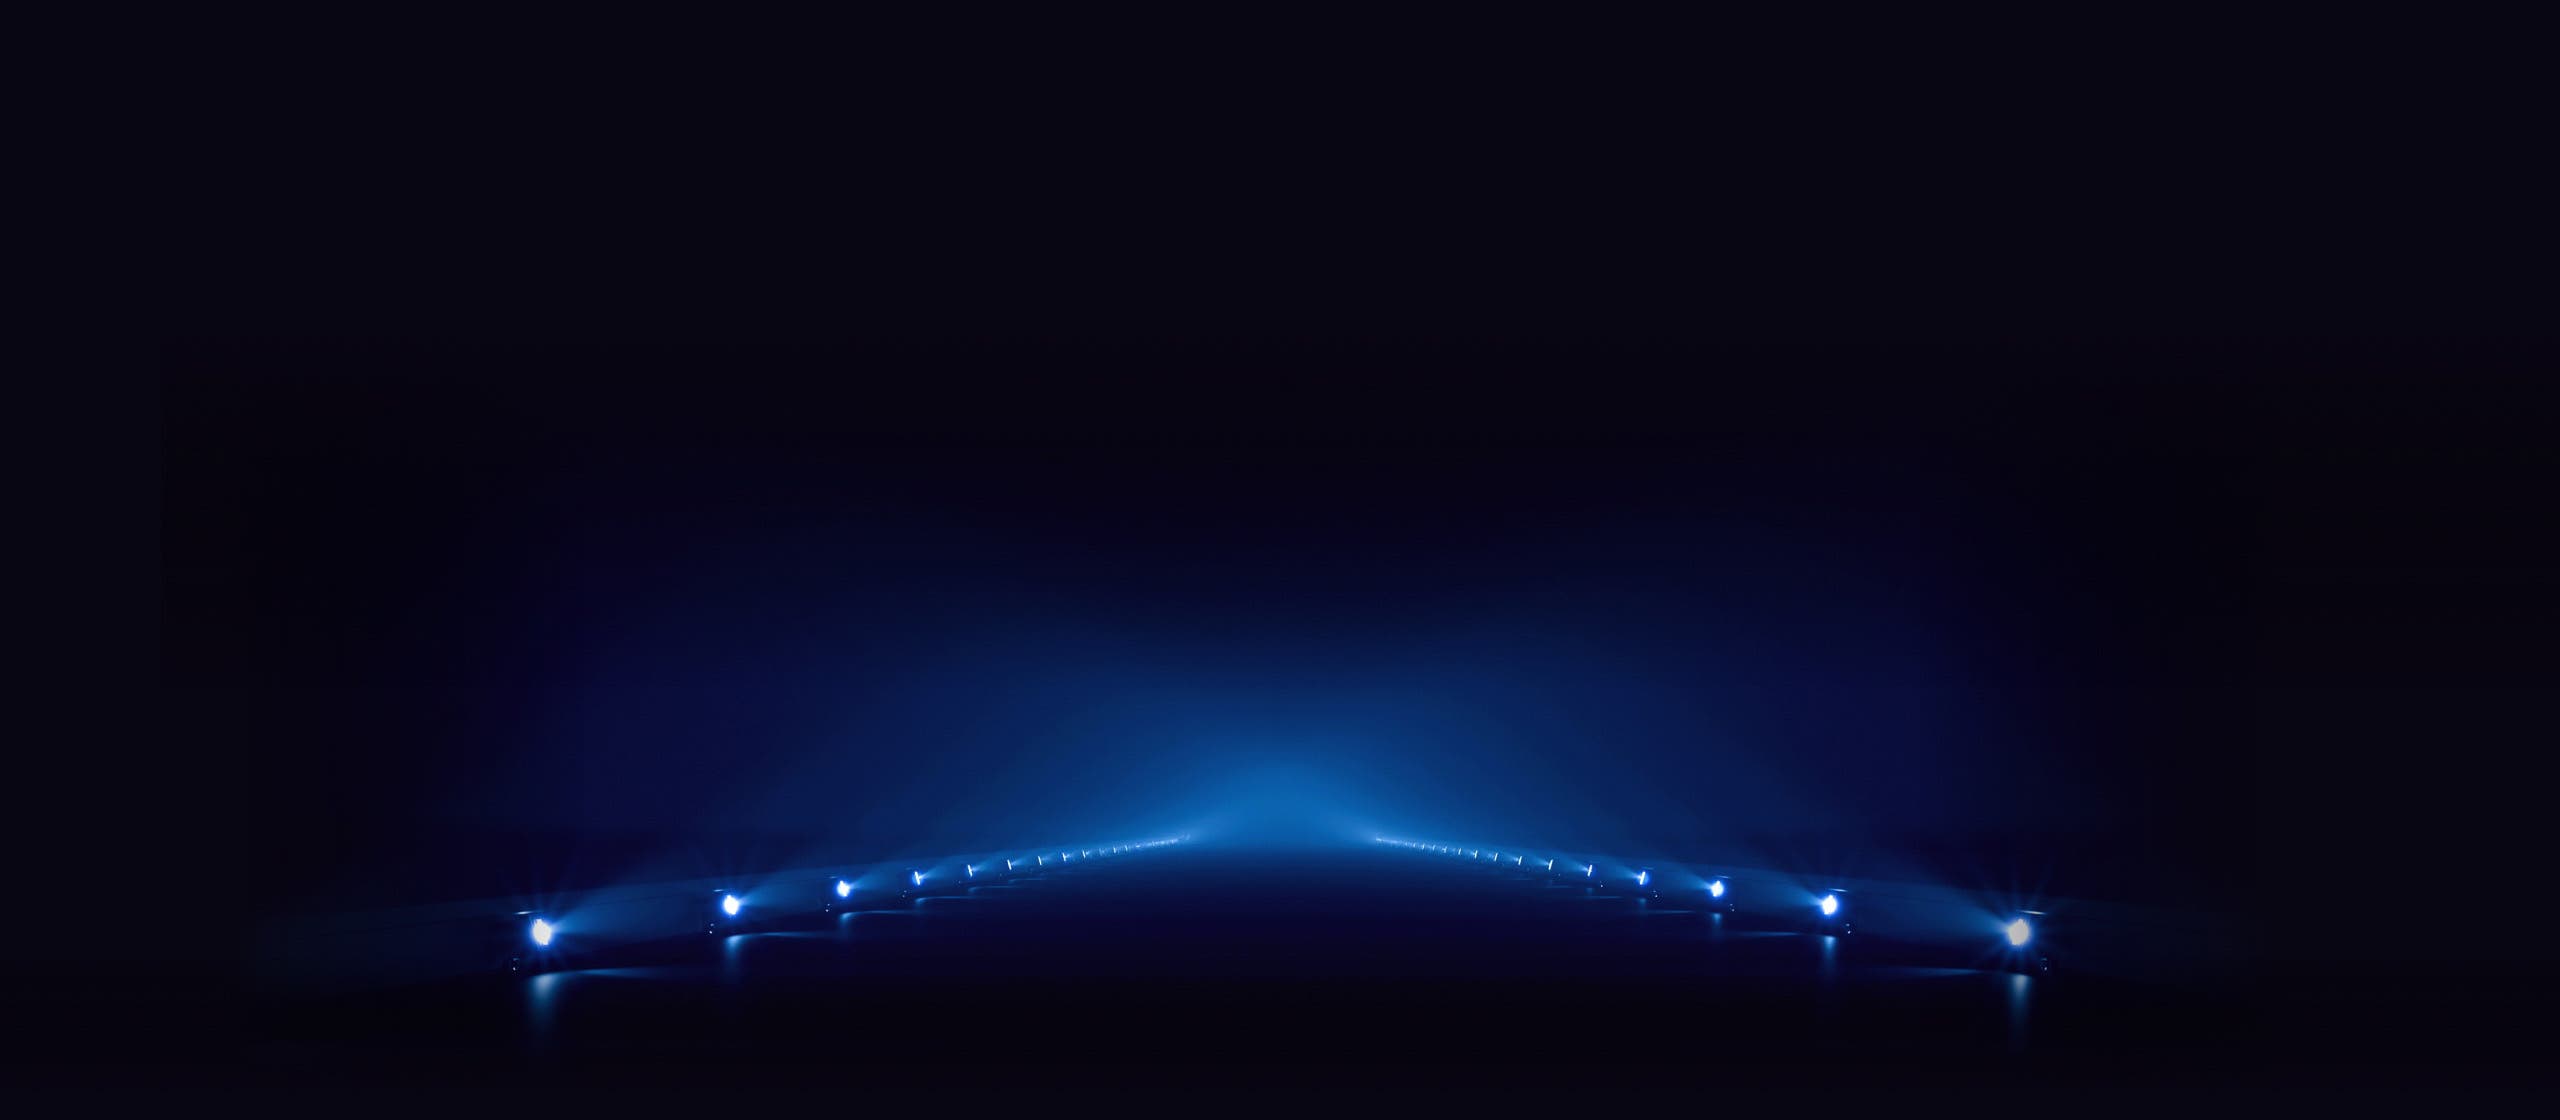 Landing lights image